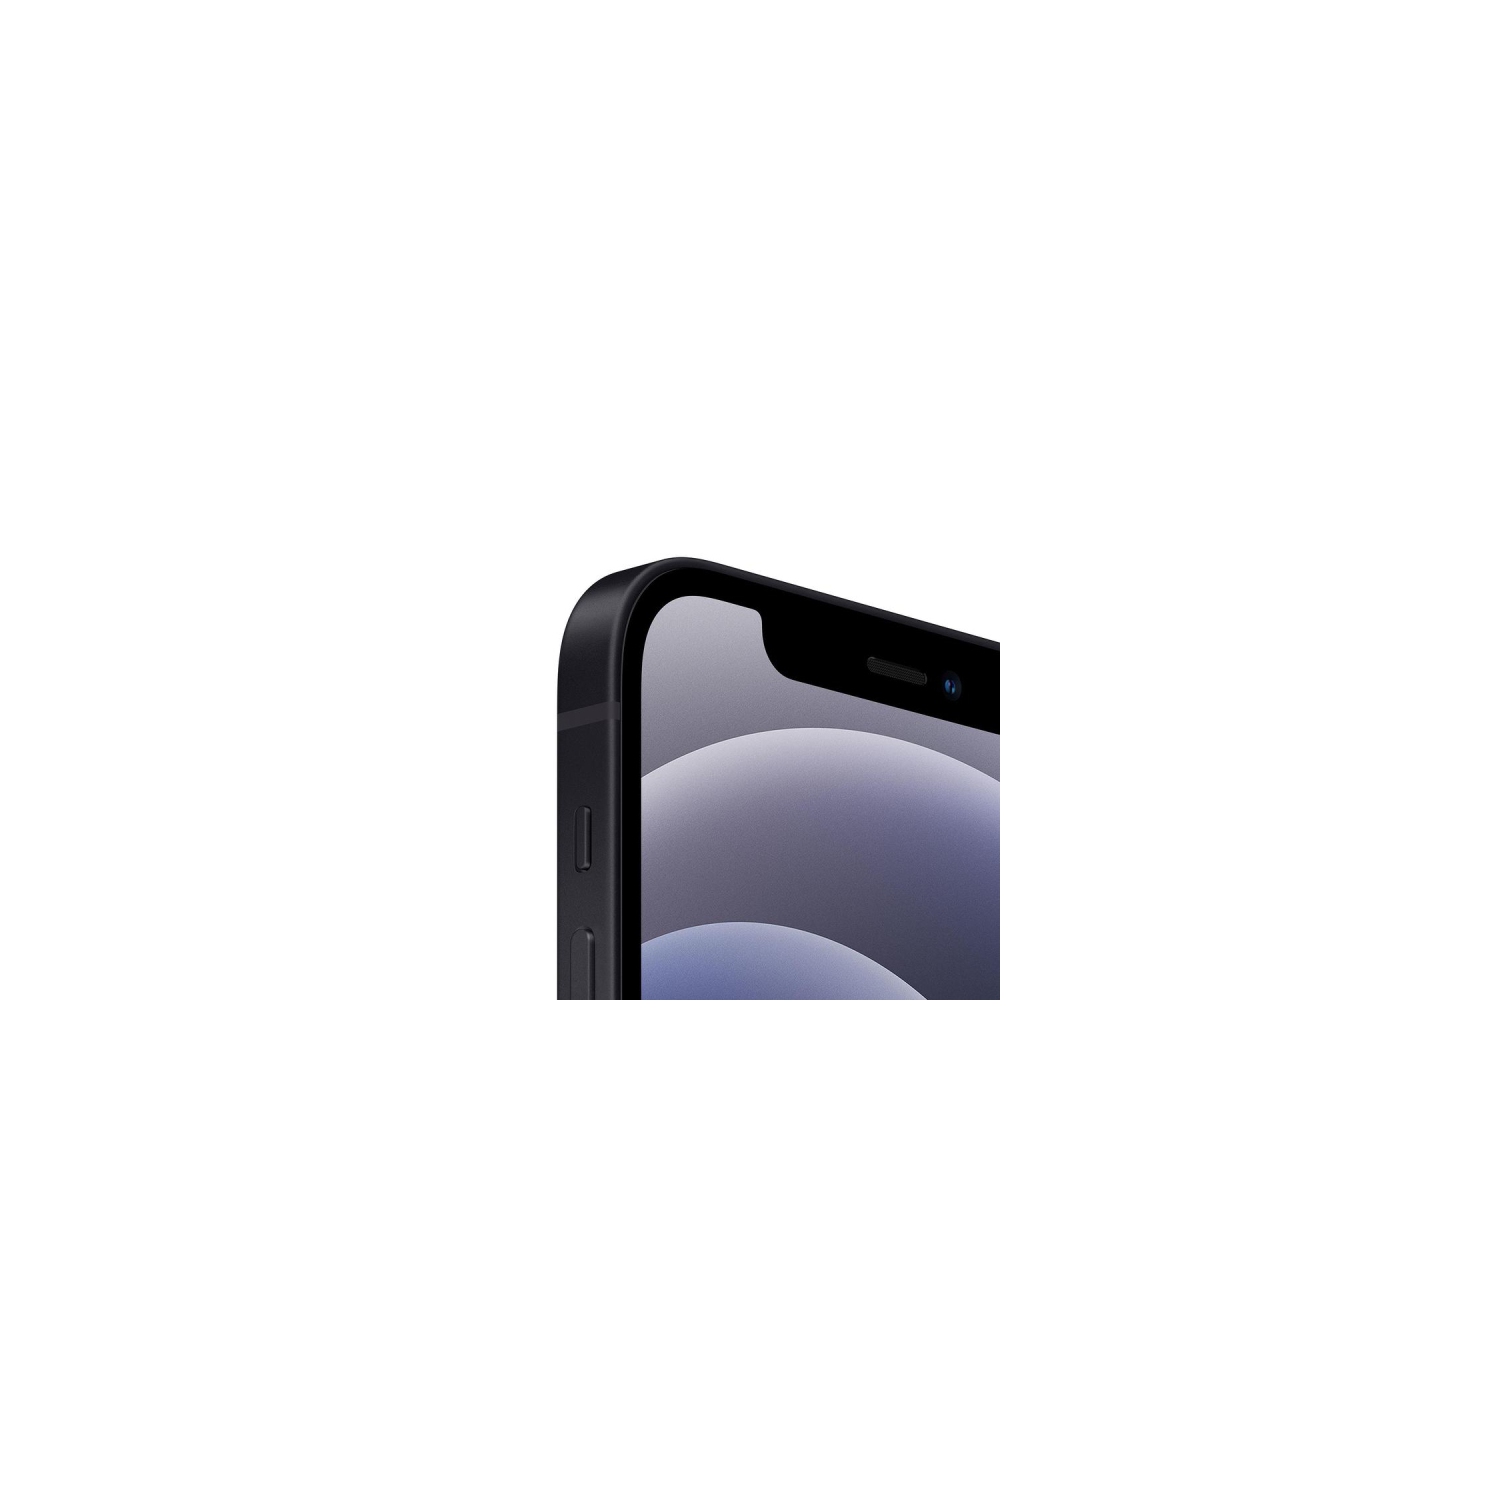 Refurbished (Good) - Apple iPhone 12 64GB - Black - Unlocked 